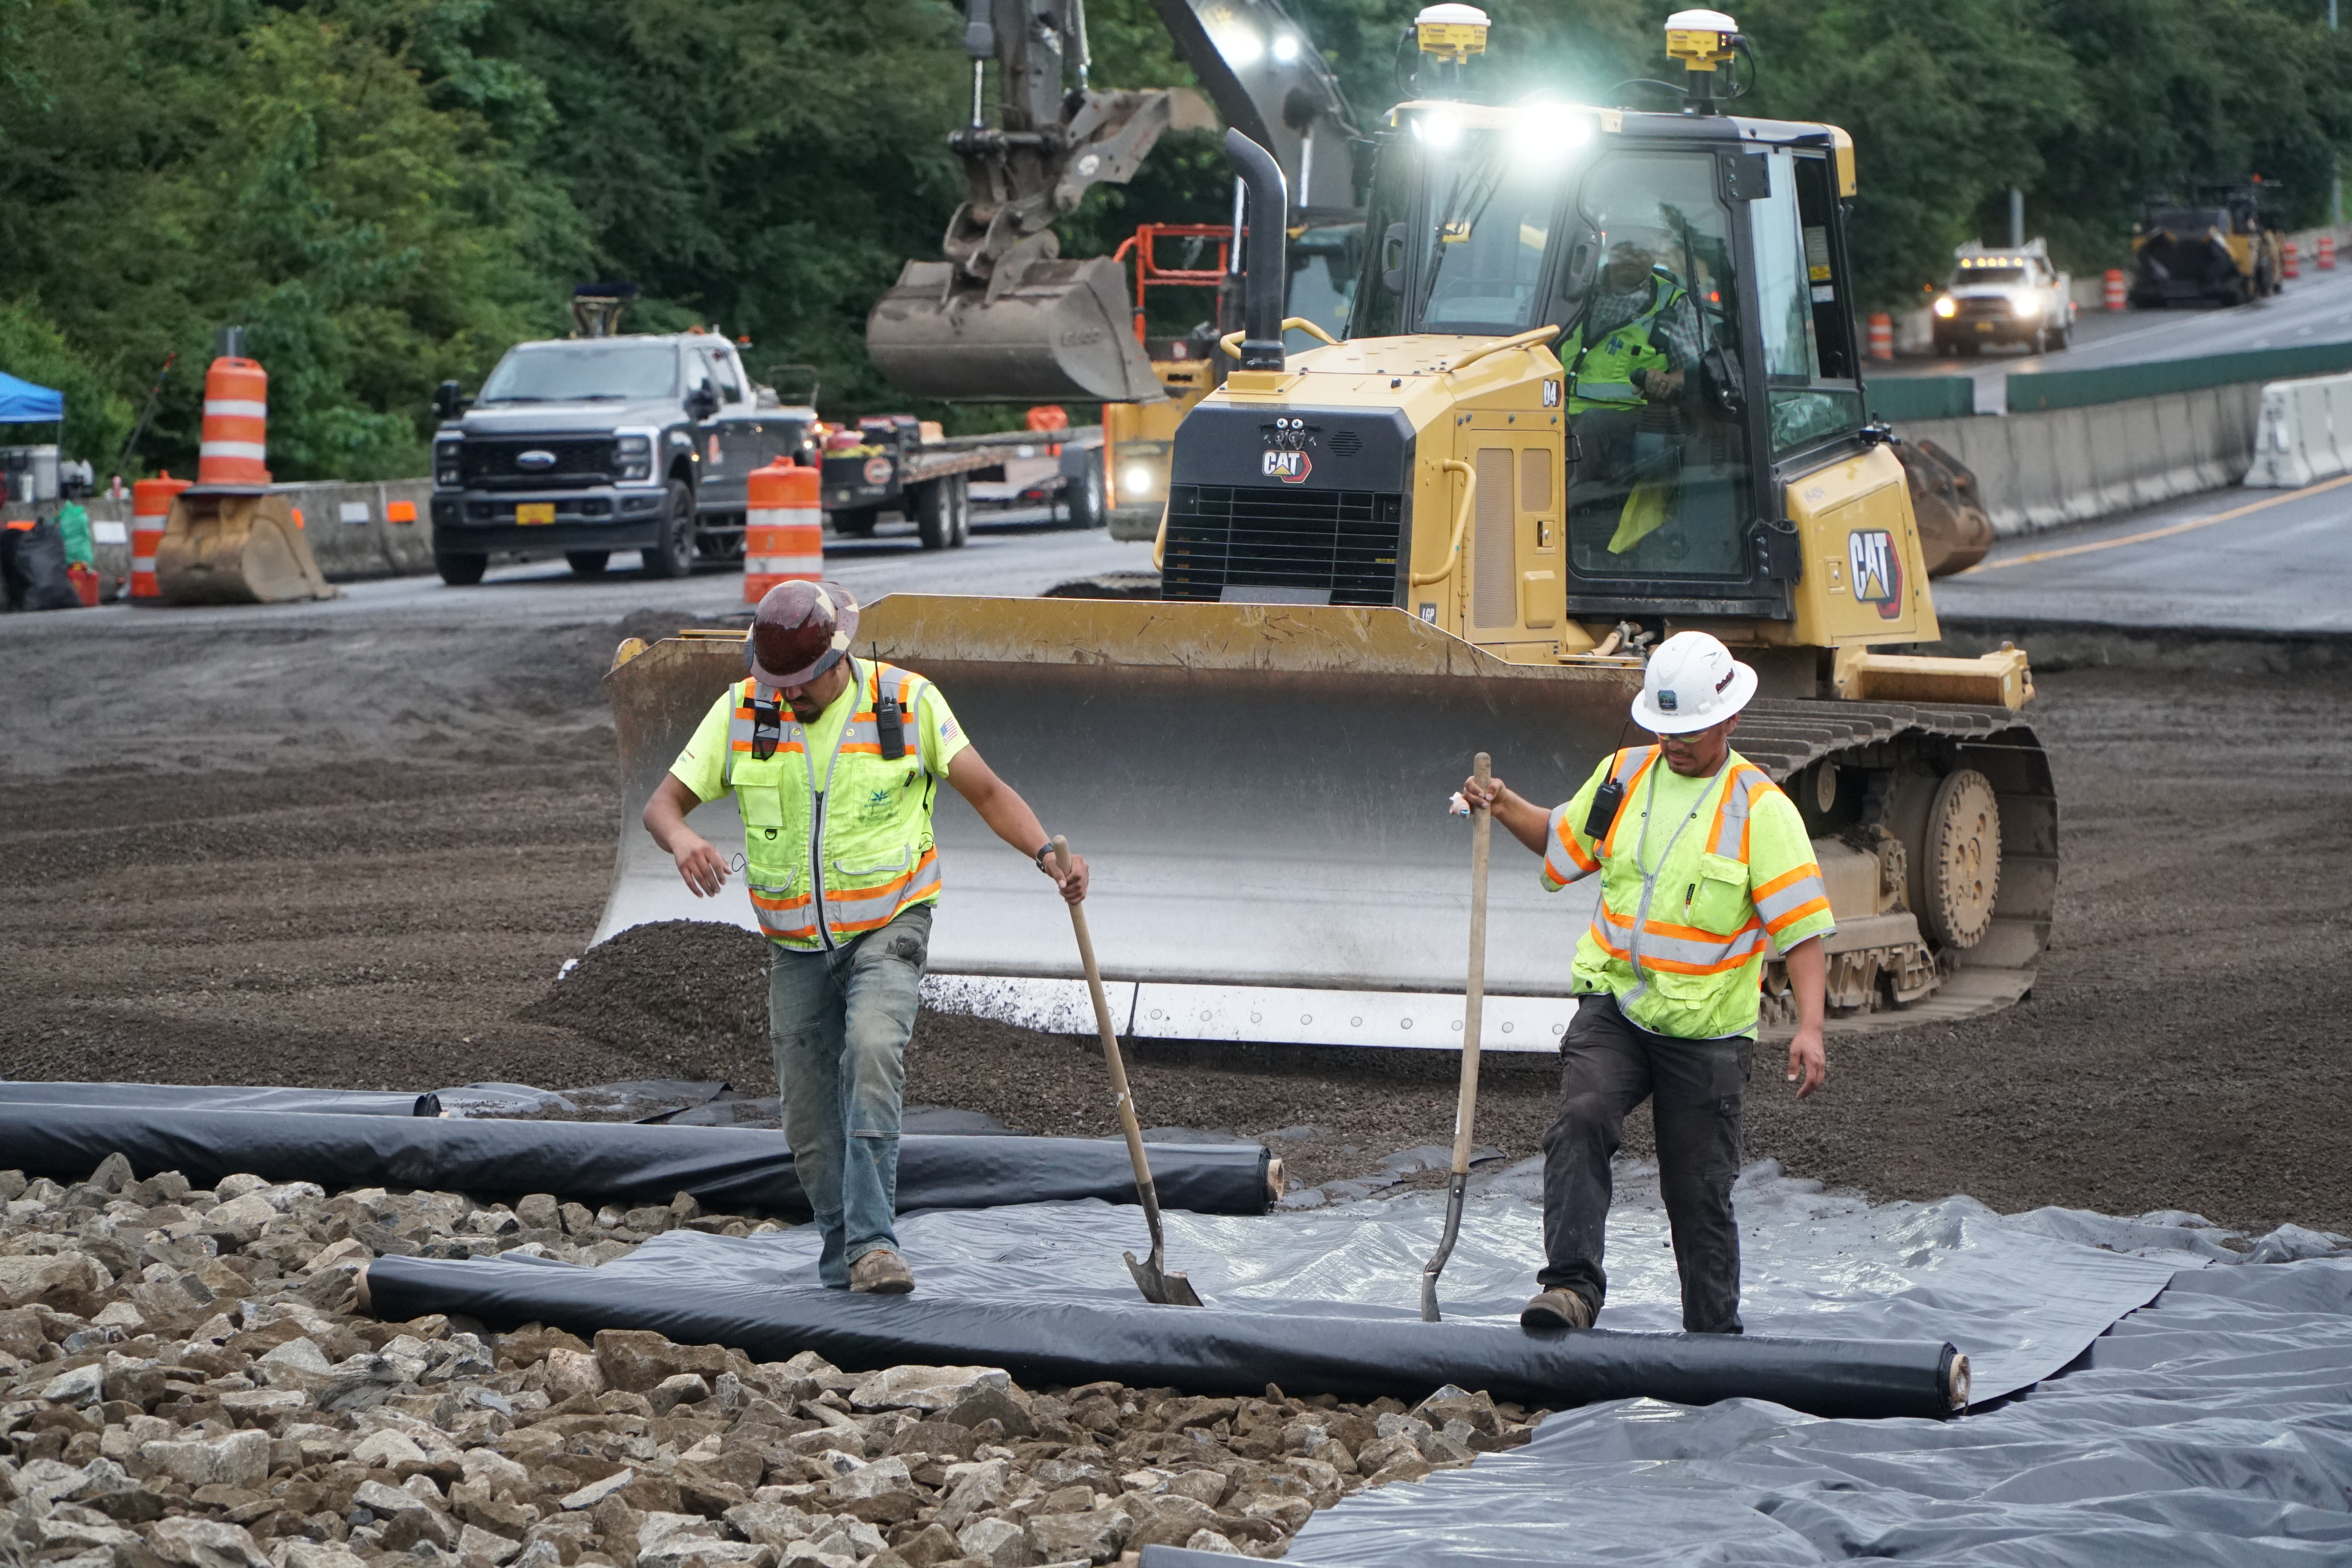 Crews preparing the roadway to add new asphalt paving on Saturday